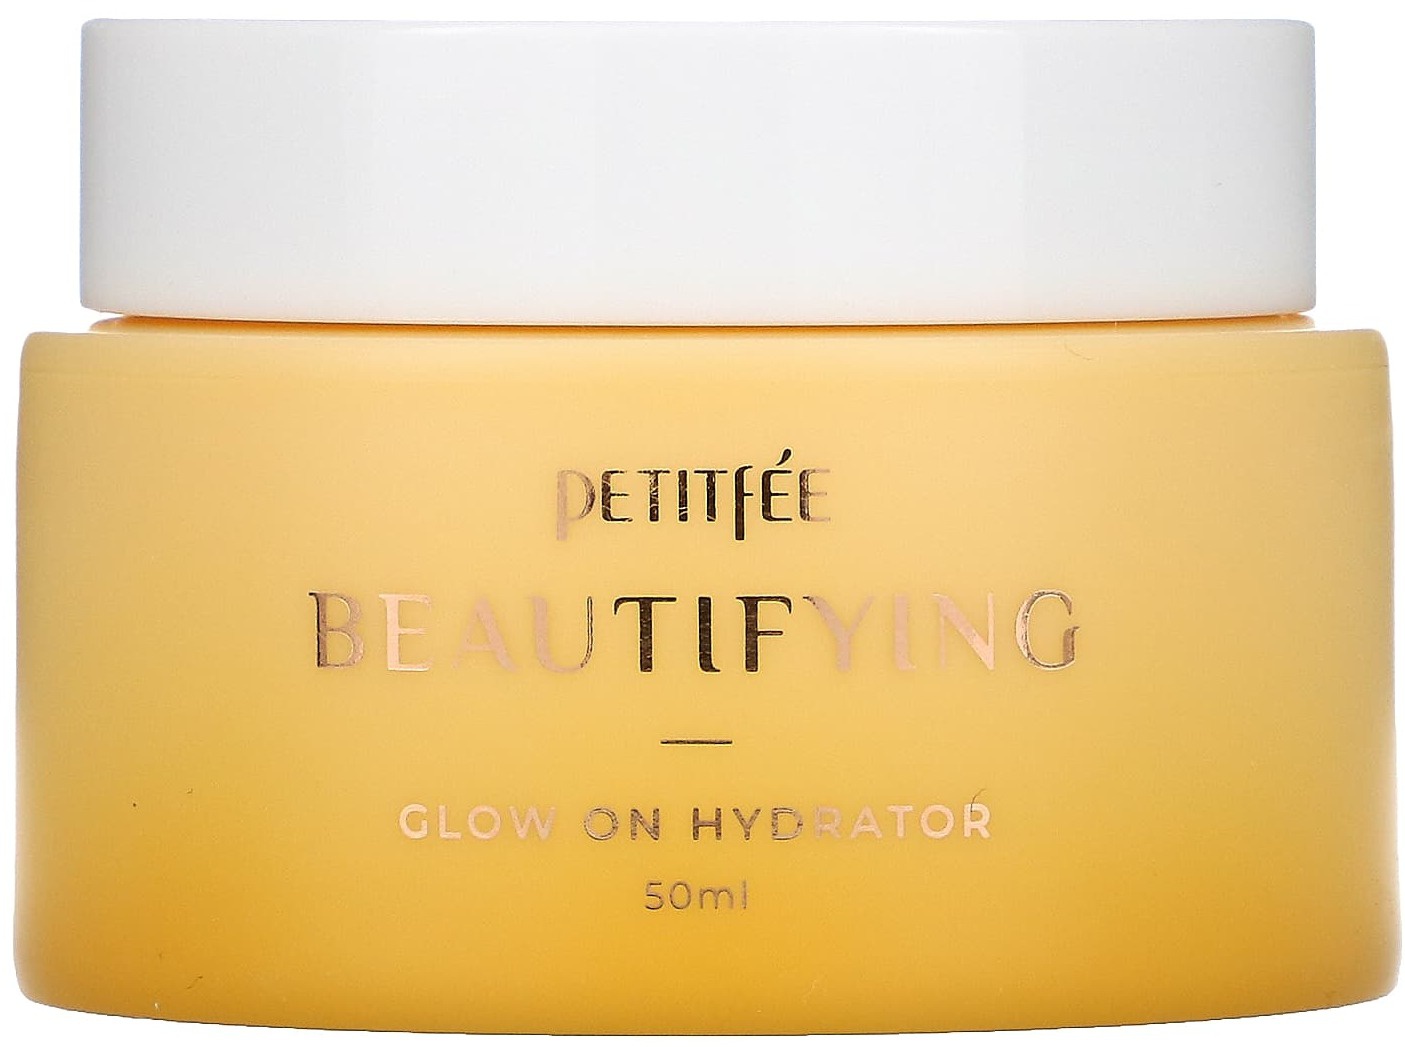 Petitfee Beautifying Glow On Hydrator